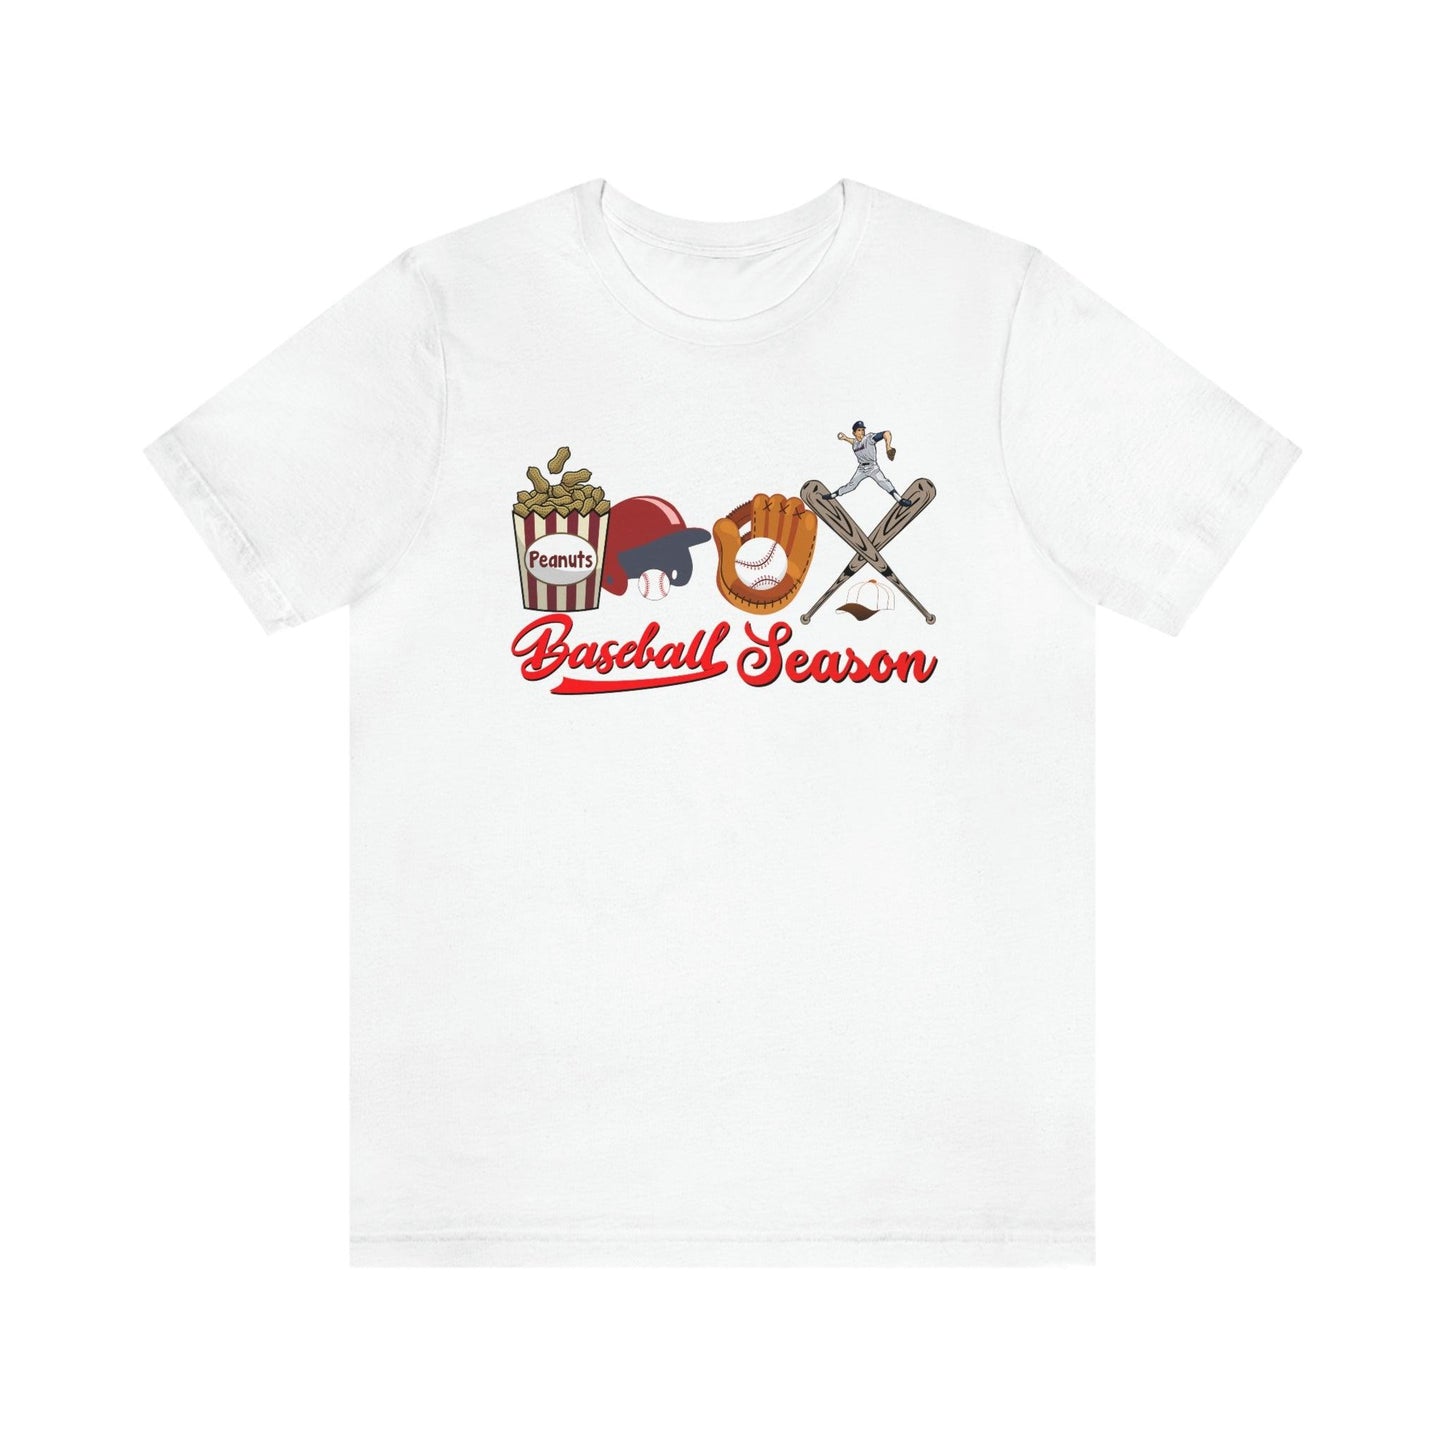 Baseball Season Baseball shirt baseball tee baseball tshirt - Sport shirt Baseball Mom shirt Baseball Mama shirt gift for him gameday shirt